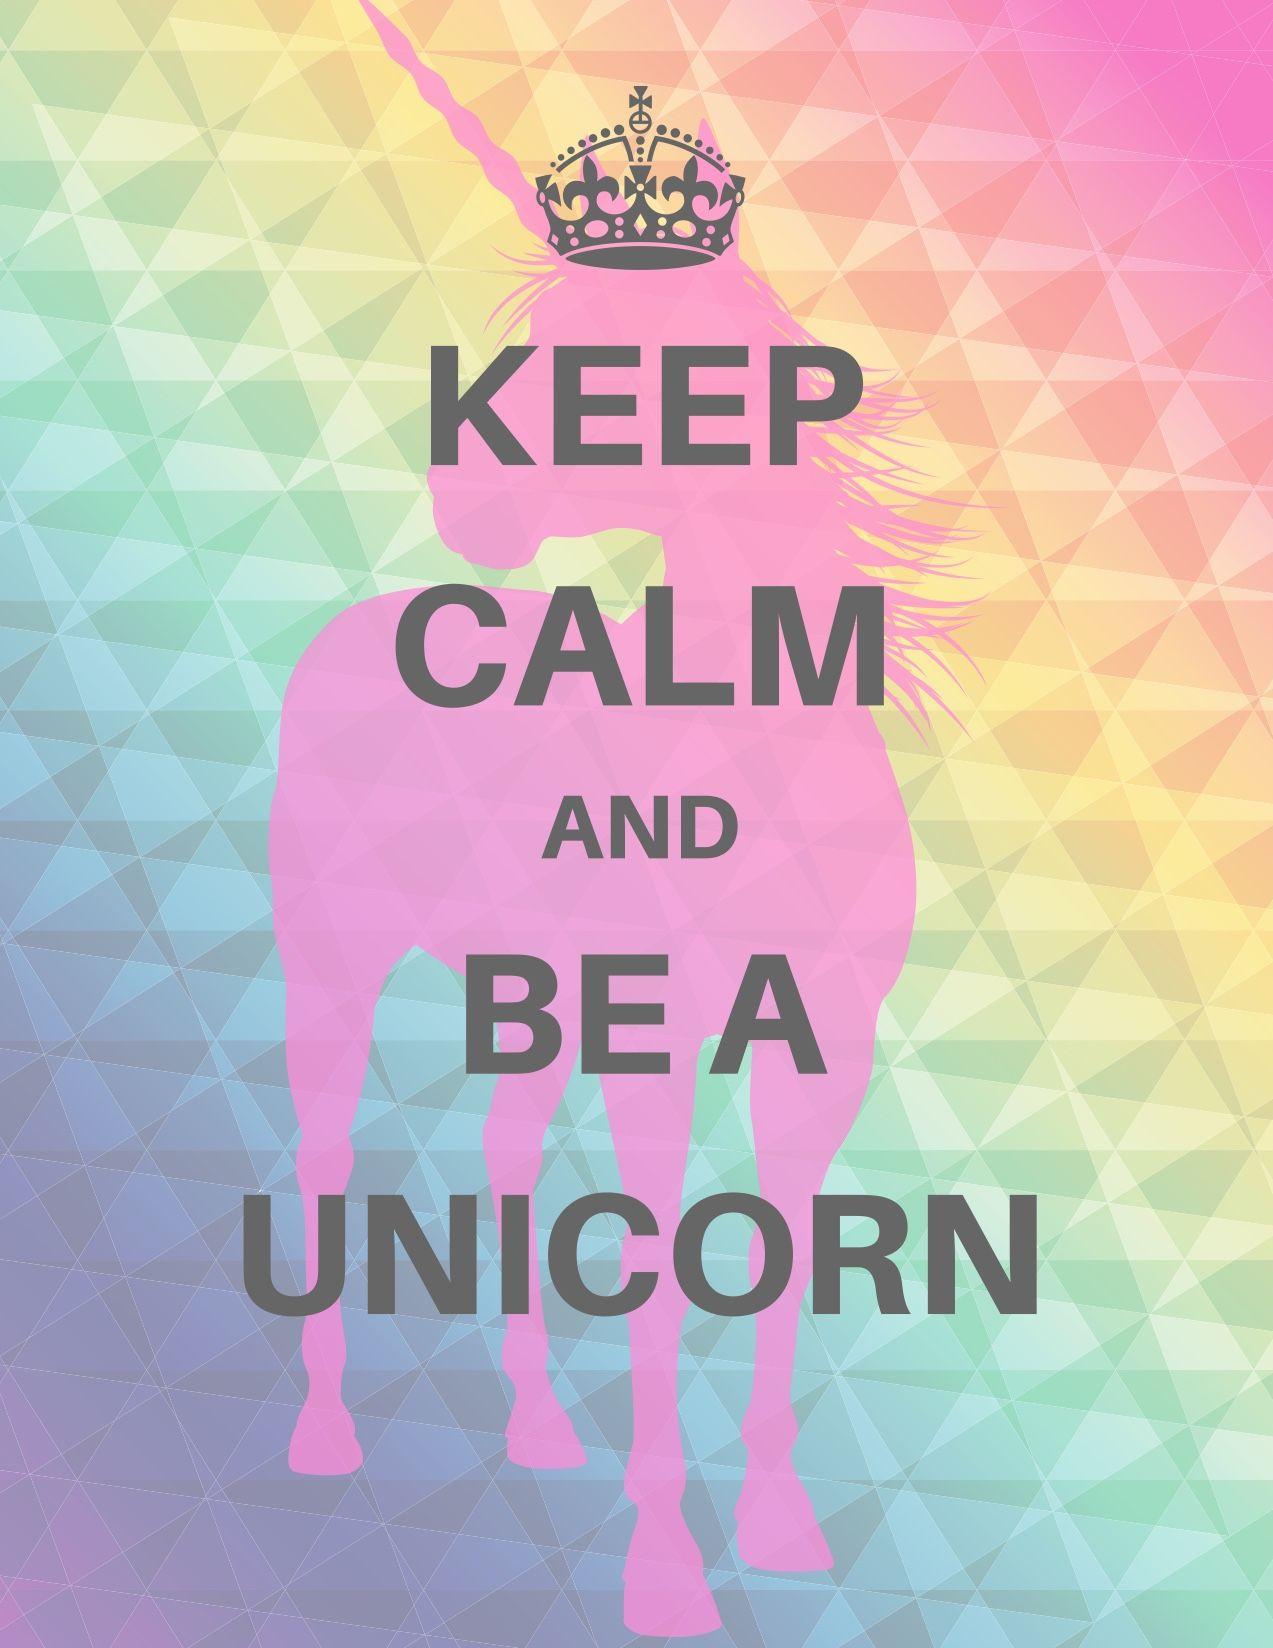 Keep calm and be a unicorn. Unicorn wallpaper, Unicorn quotes